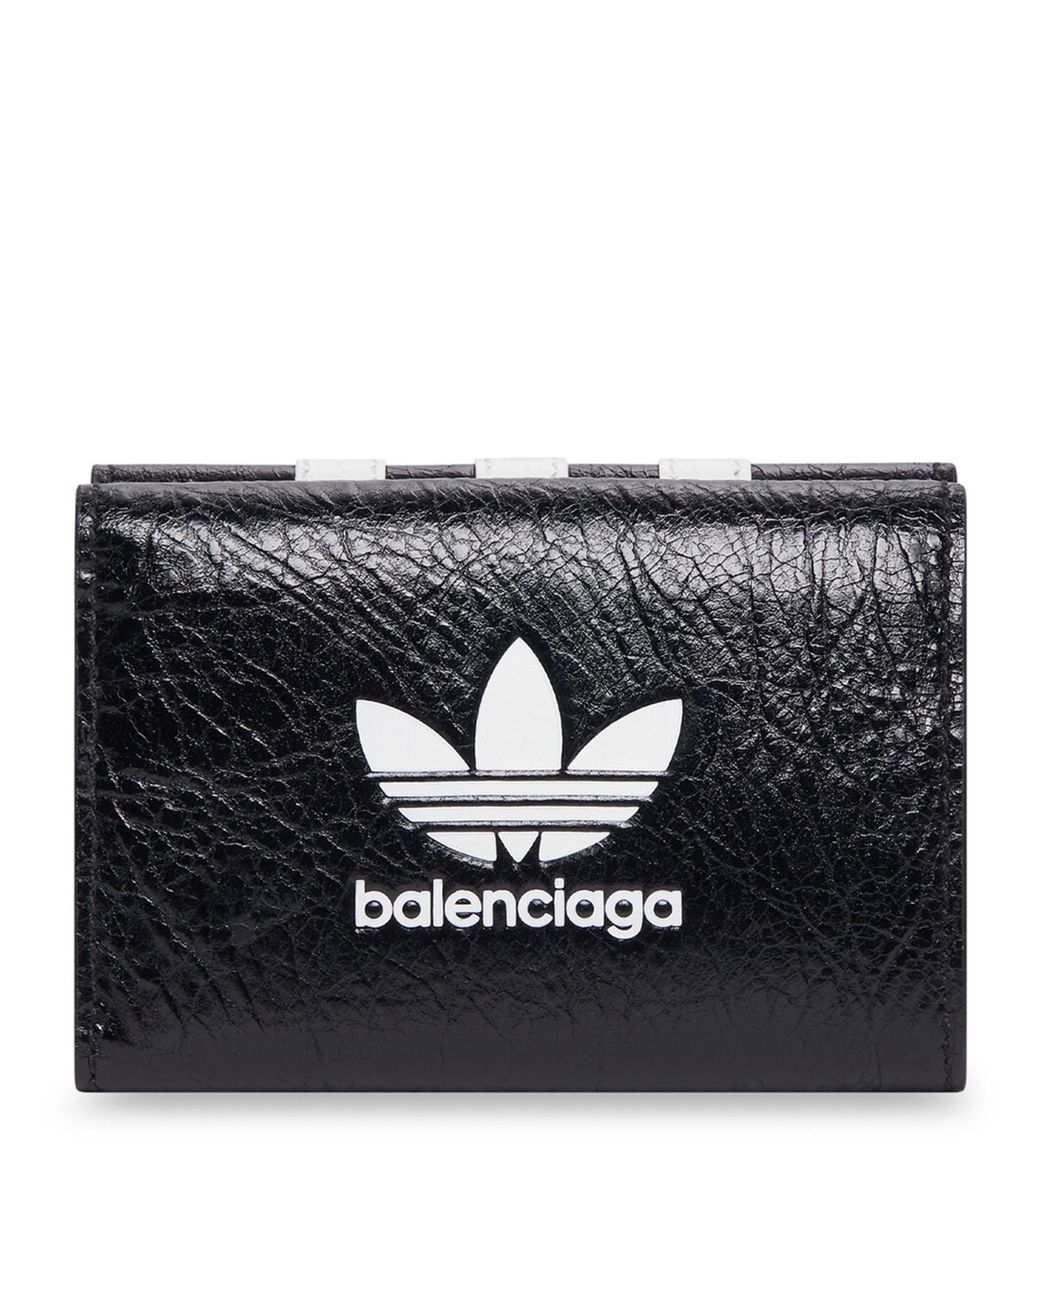 Balenciaga X Adidas Foldover Wallet in Black | Lyst